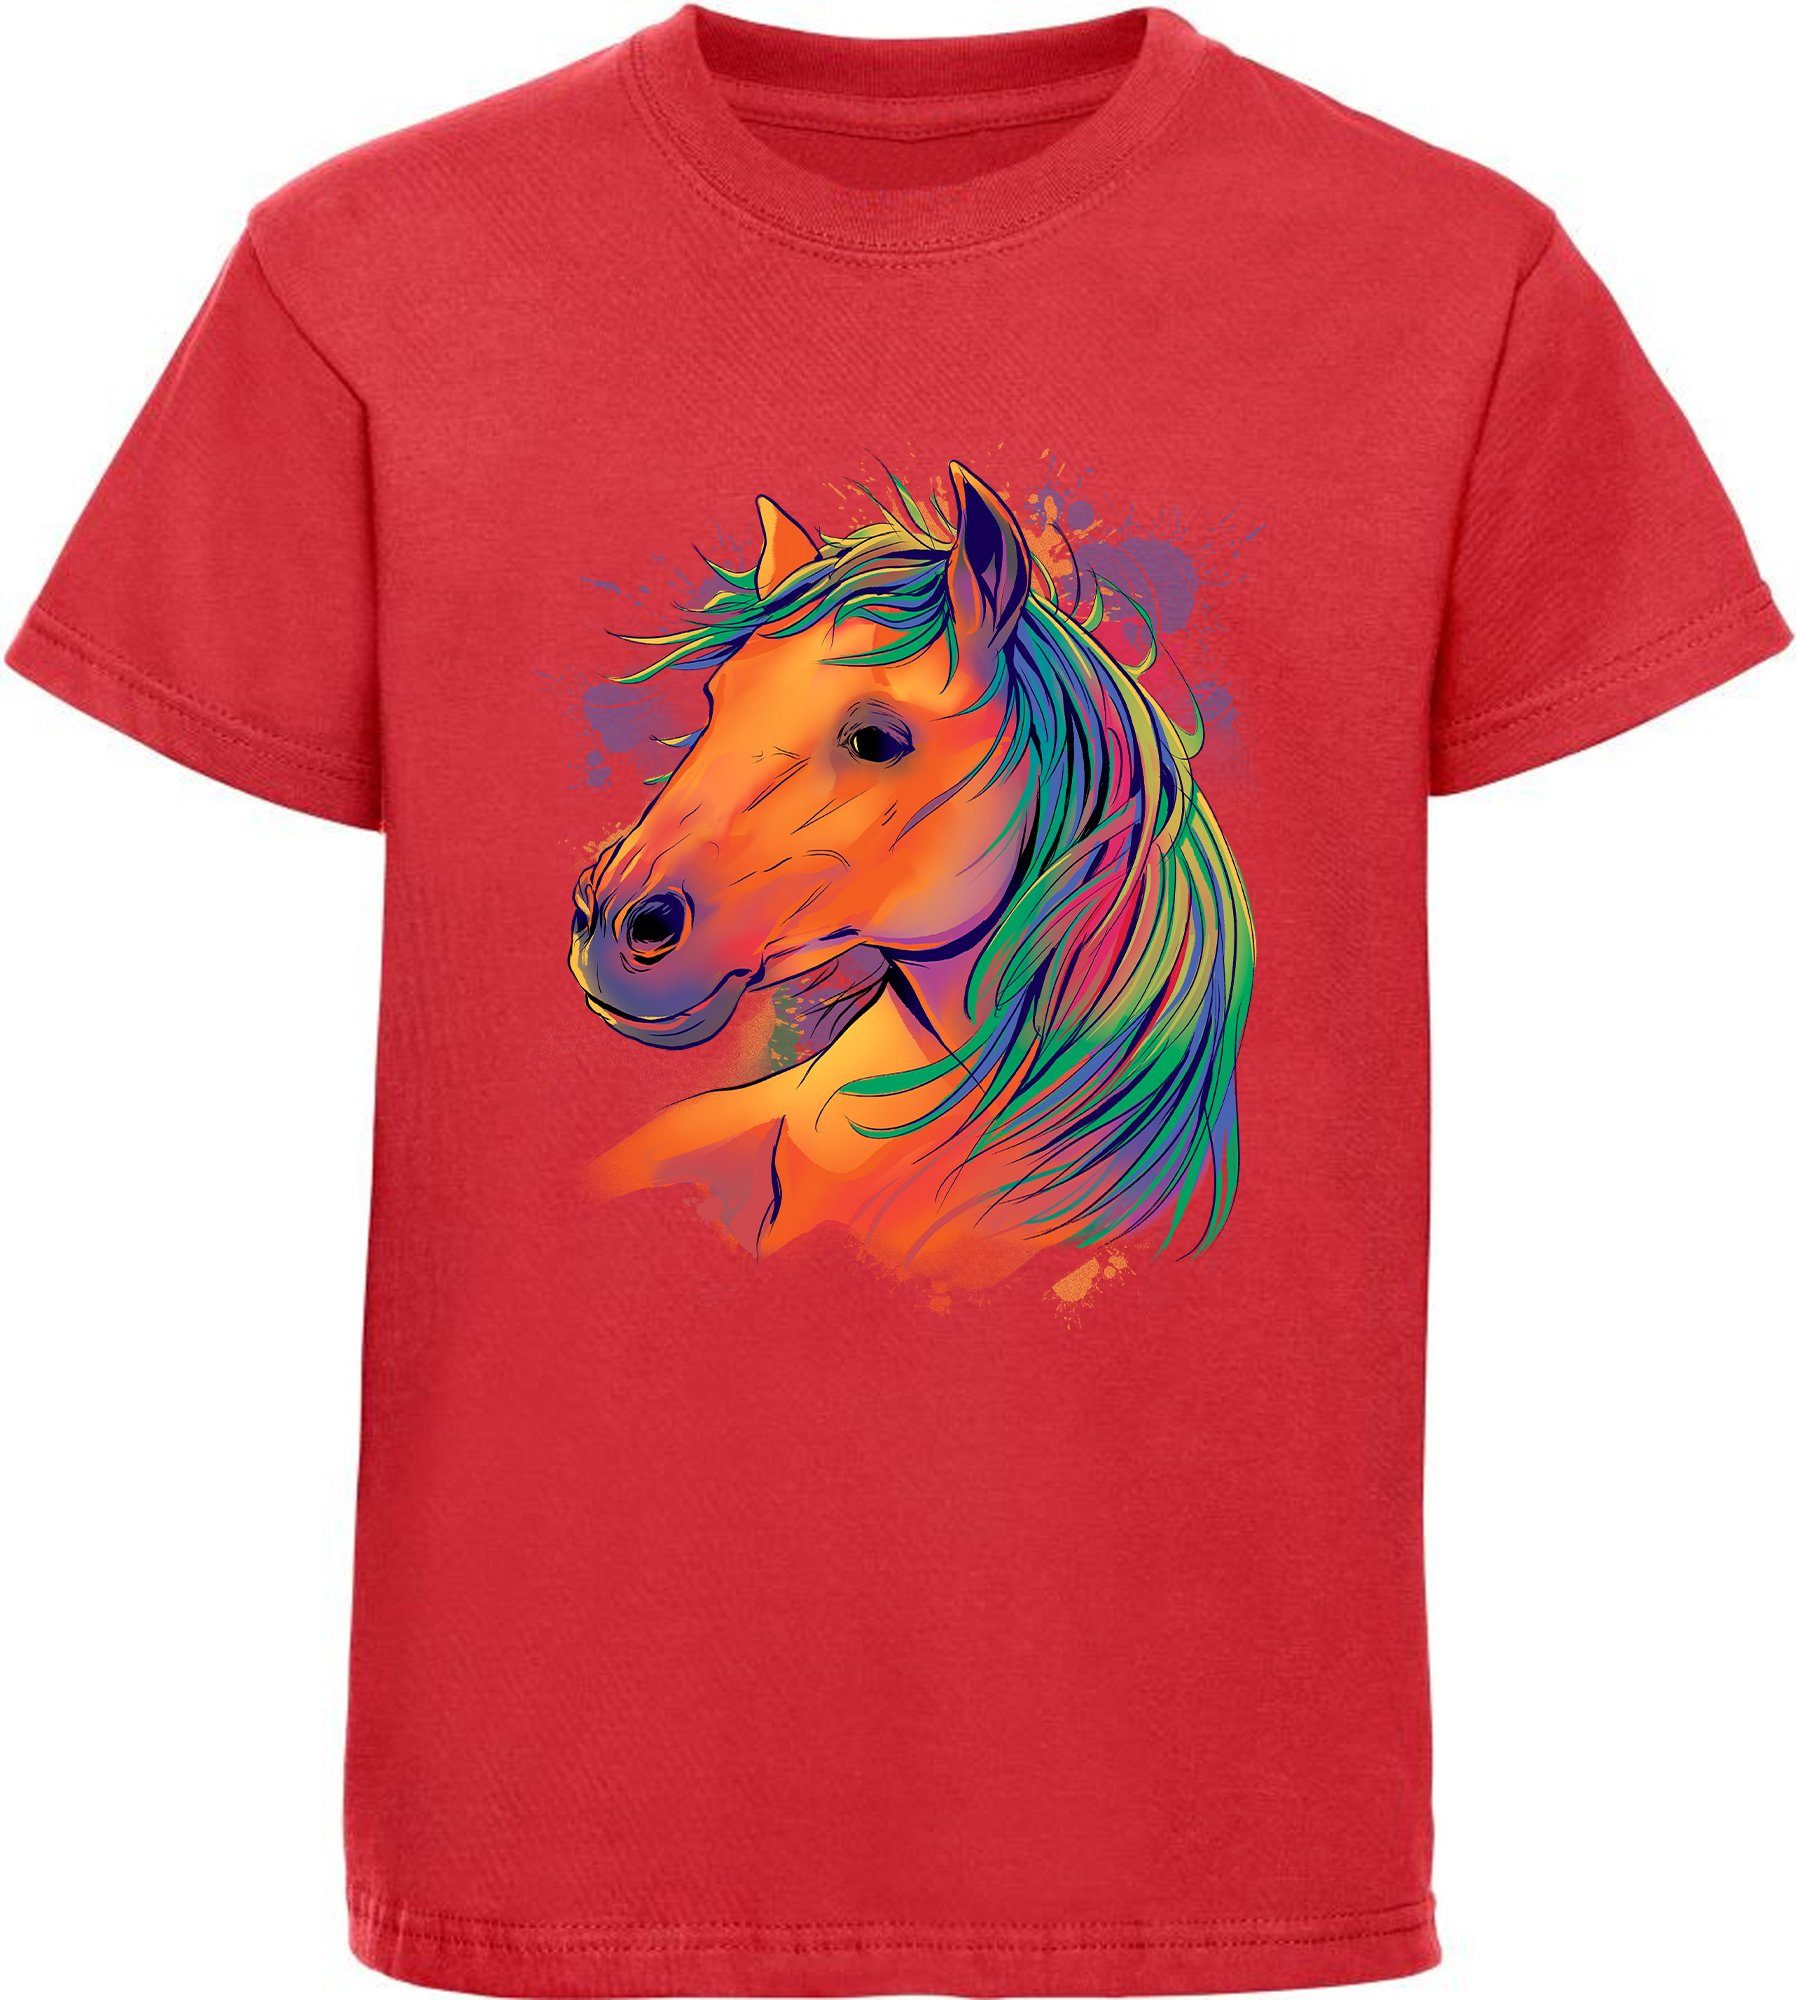 MyDesign24 Mädchen Print-Shirt Pferdekopf bedrucktes Baumwollshirt Aufdruck, - rot i167 T-Shirt mit in Ölfarben